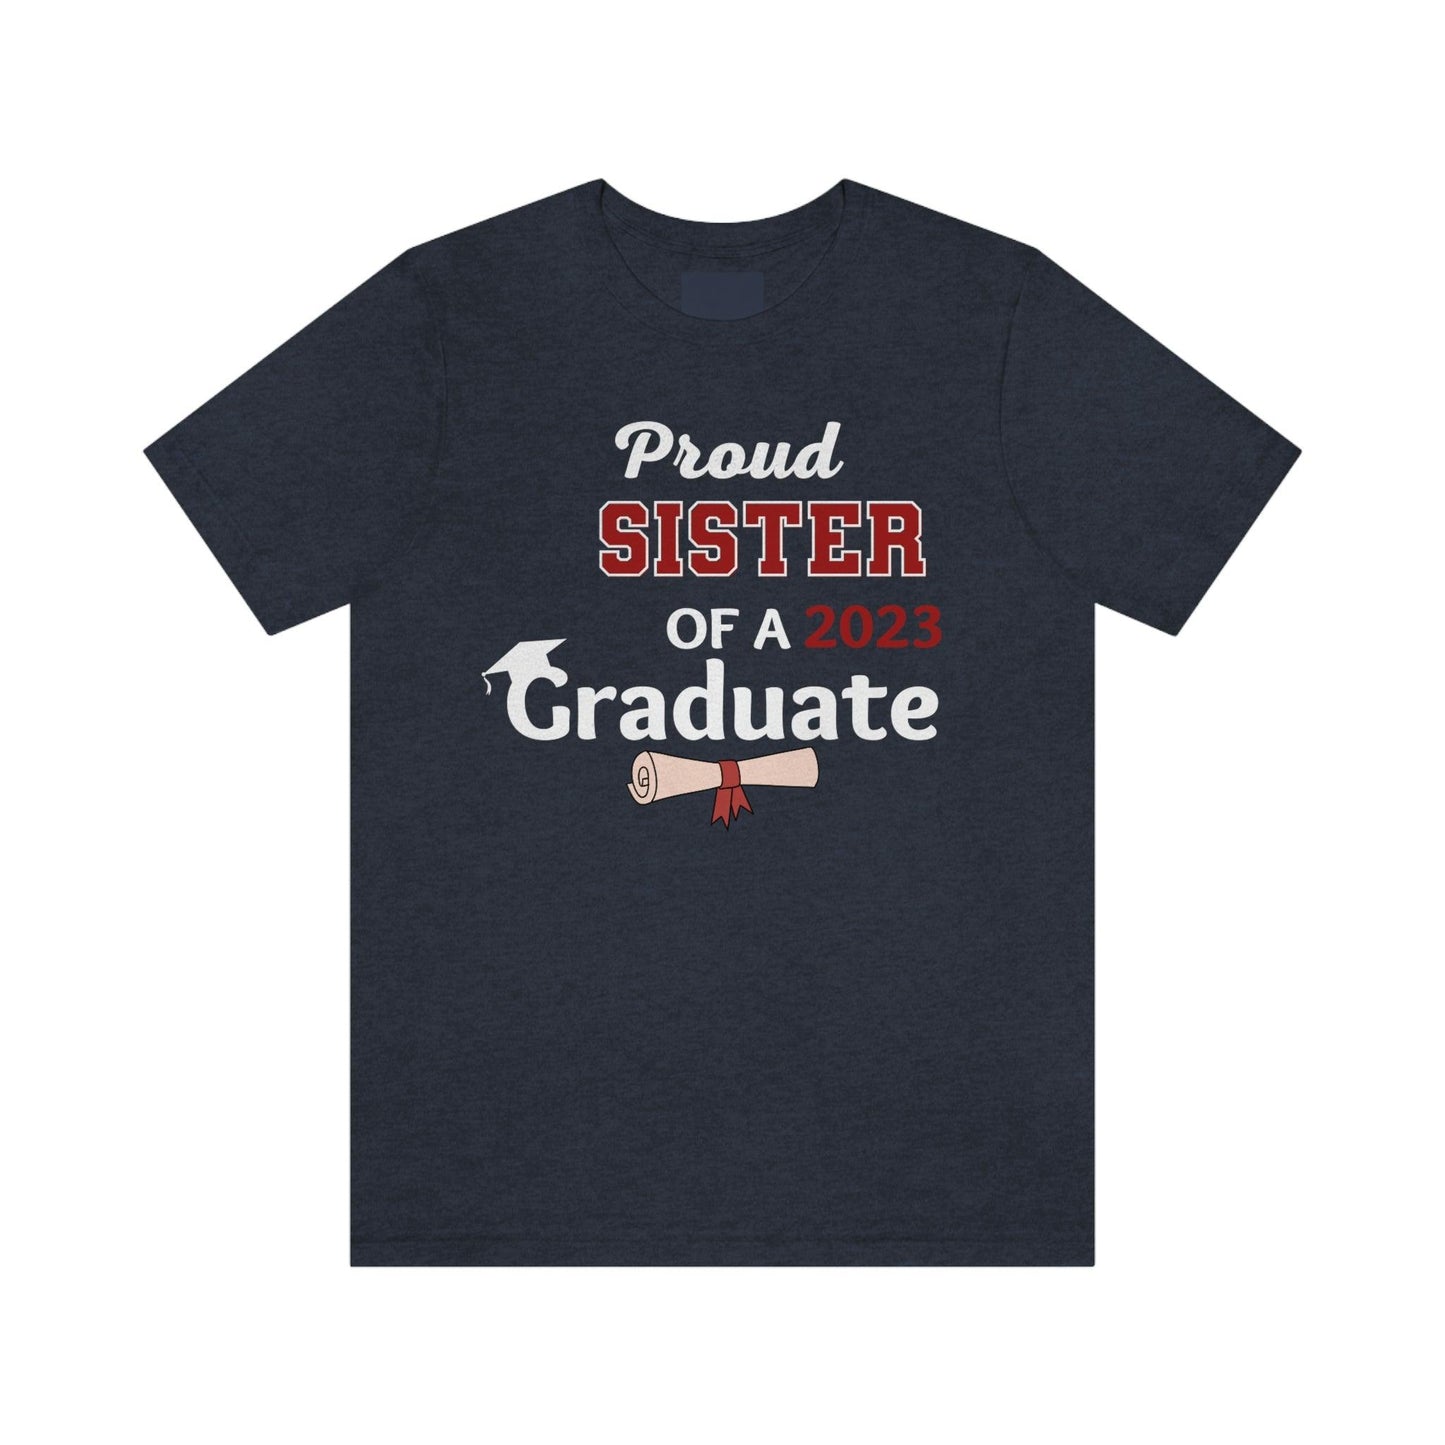 Proud Sister of a Graduate shirt - Graduation shirt - Graduation gift